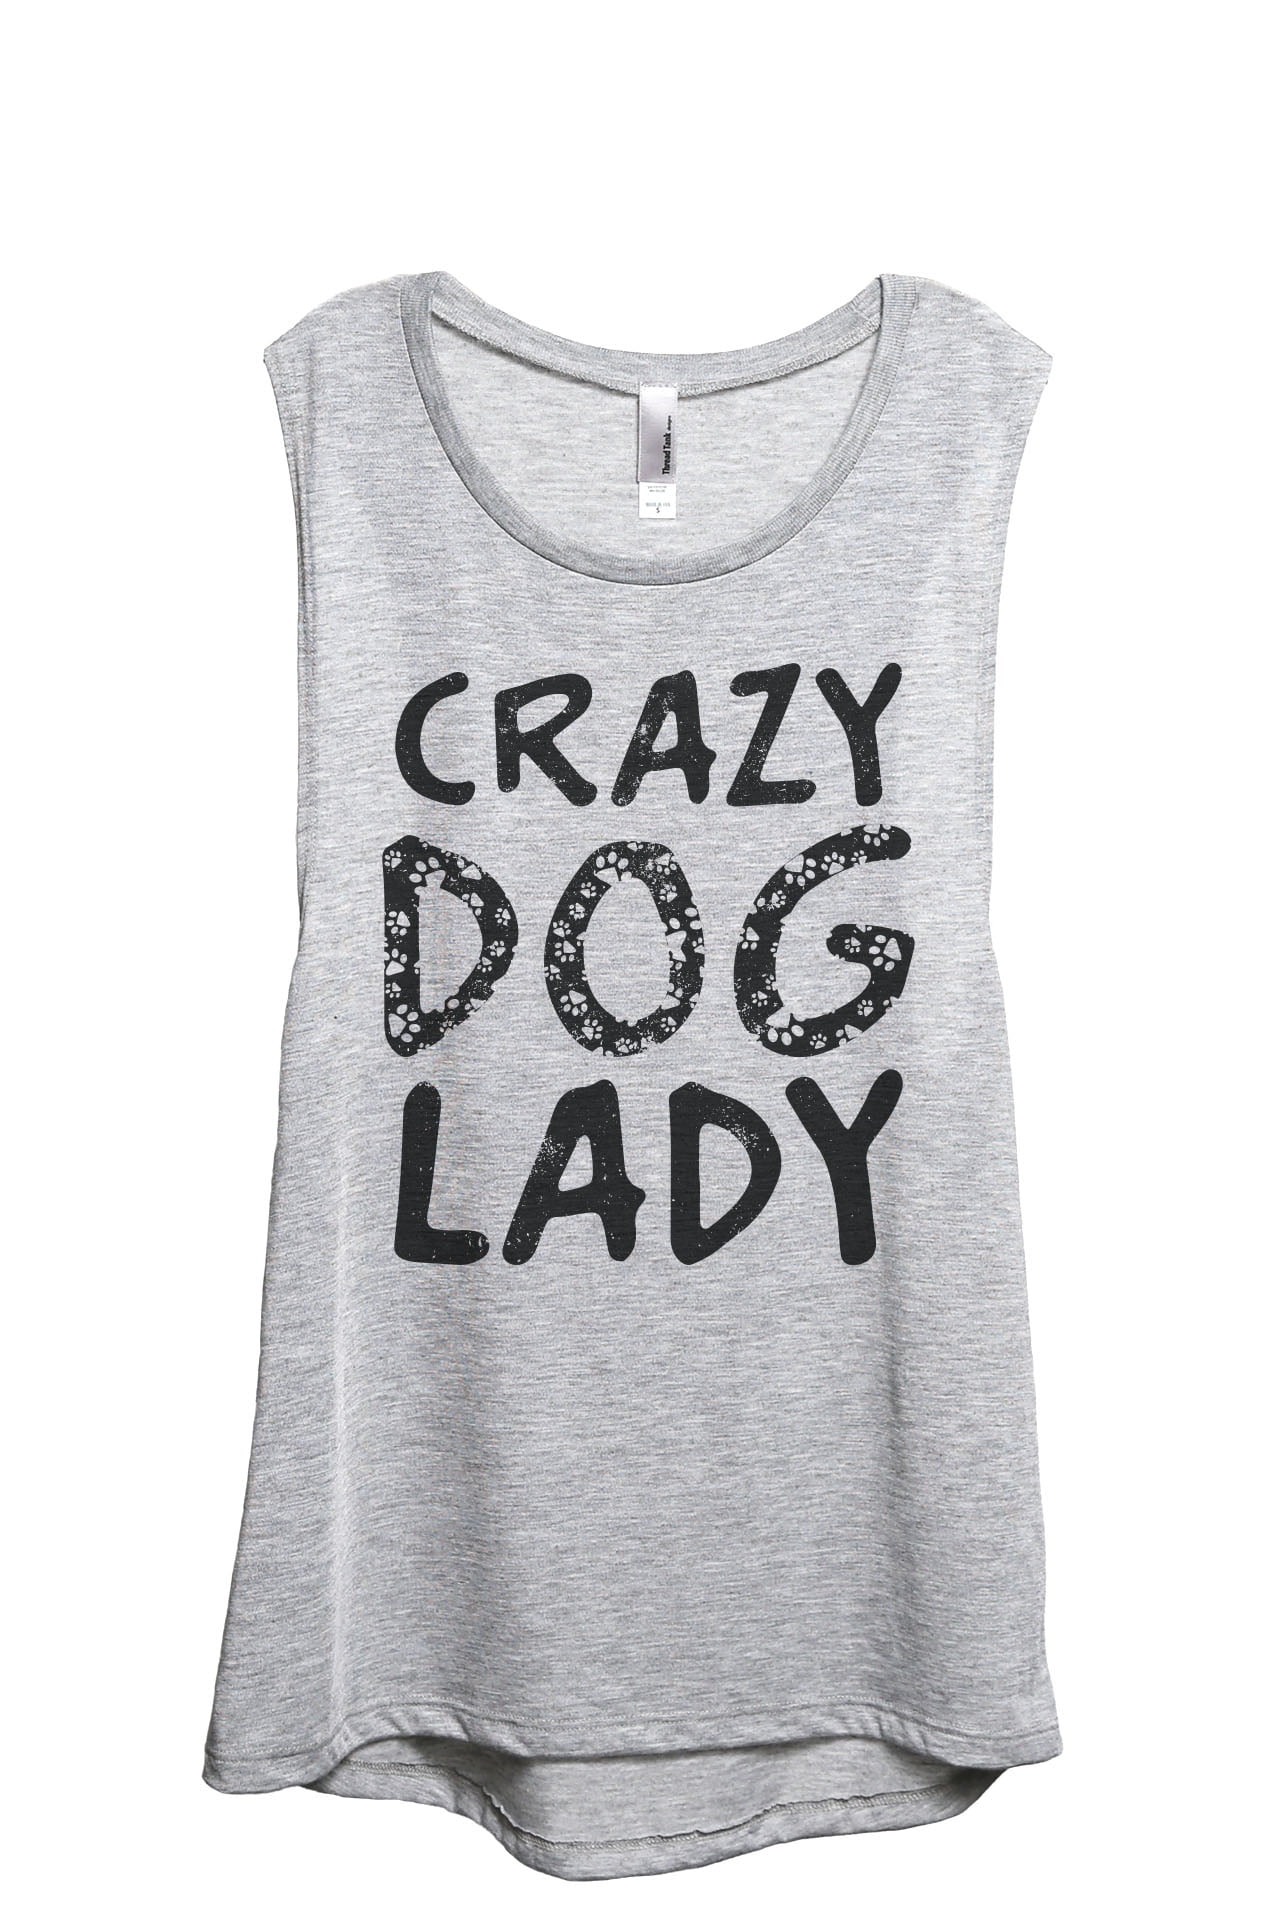 Crazy Dog Lady Women's Fashion Sleeveless Muscle Workout Yoga Tank